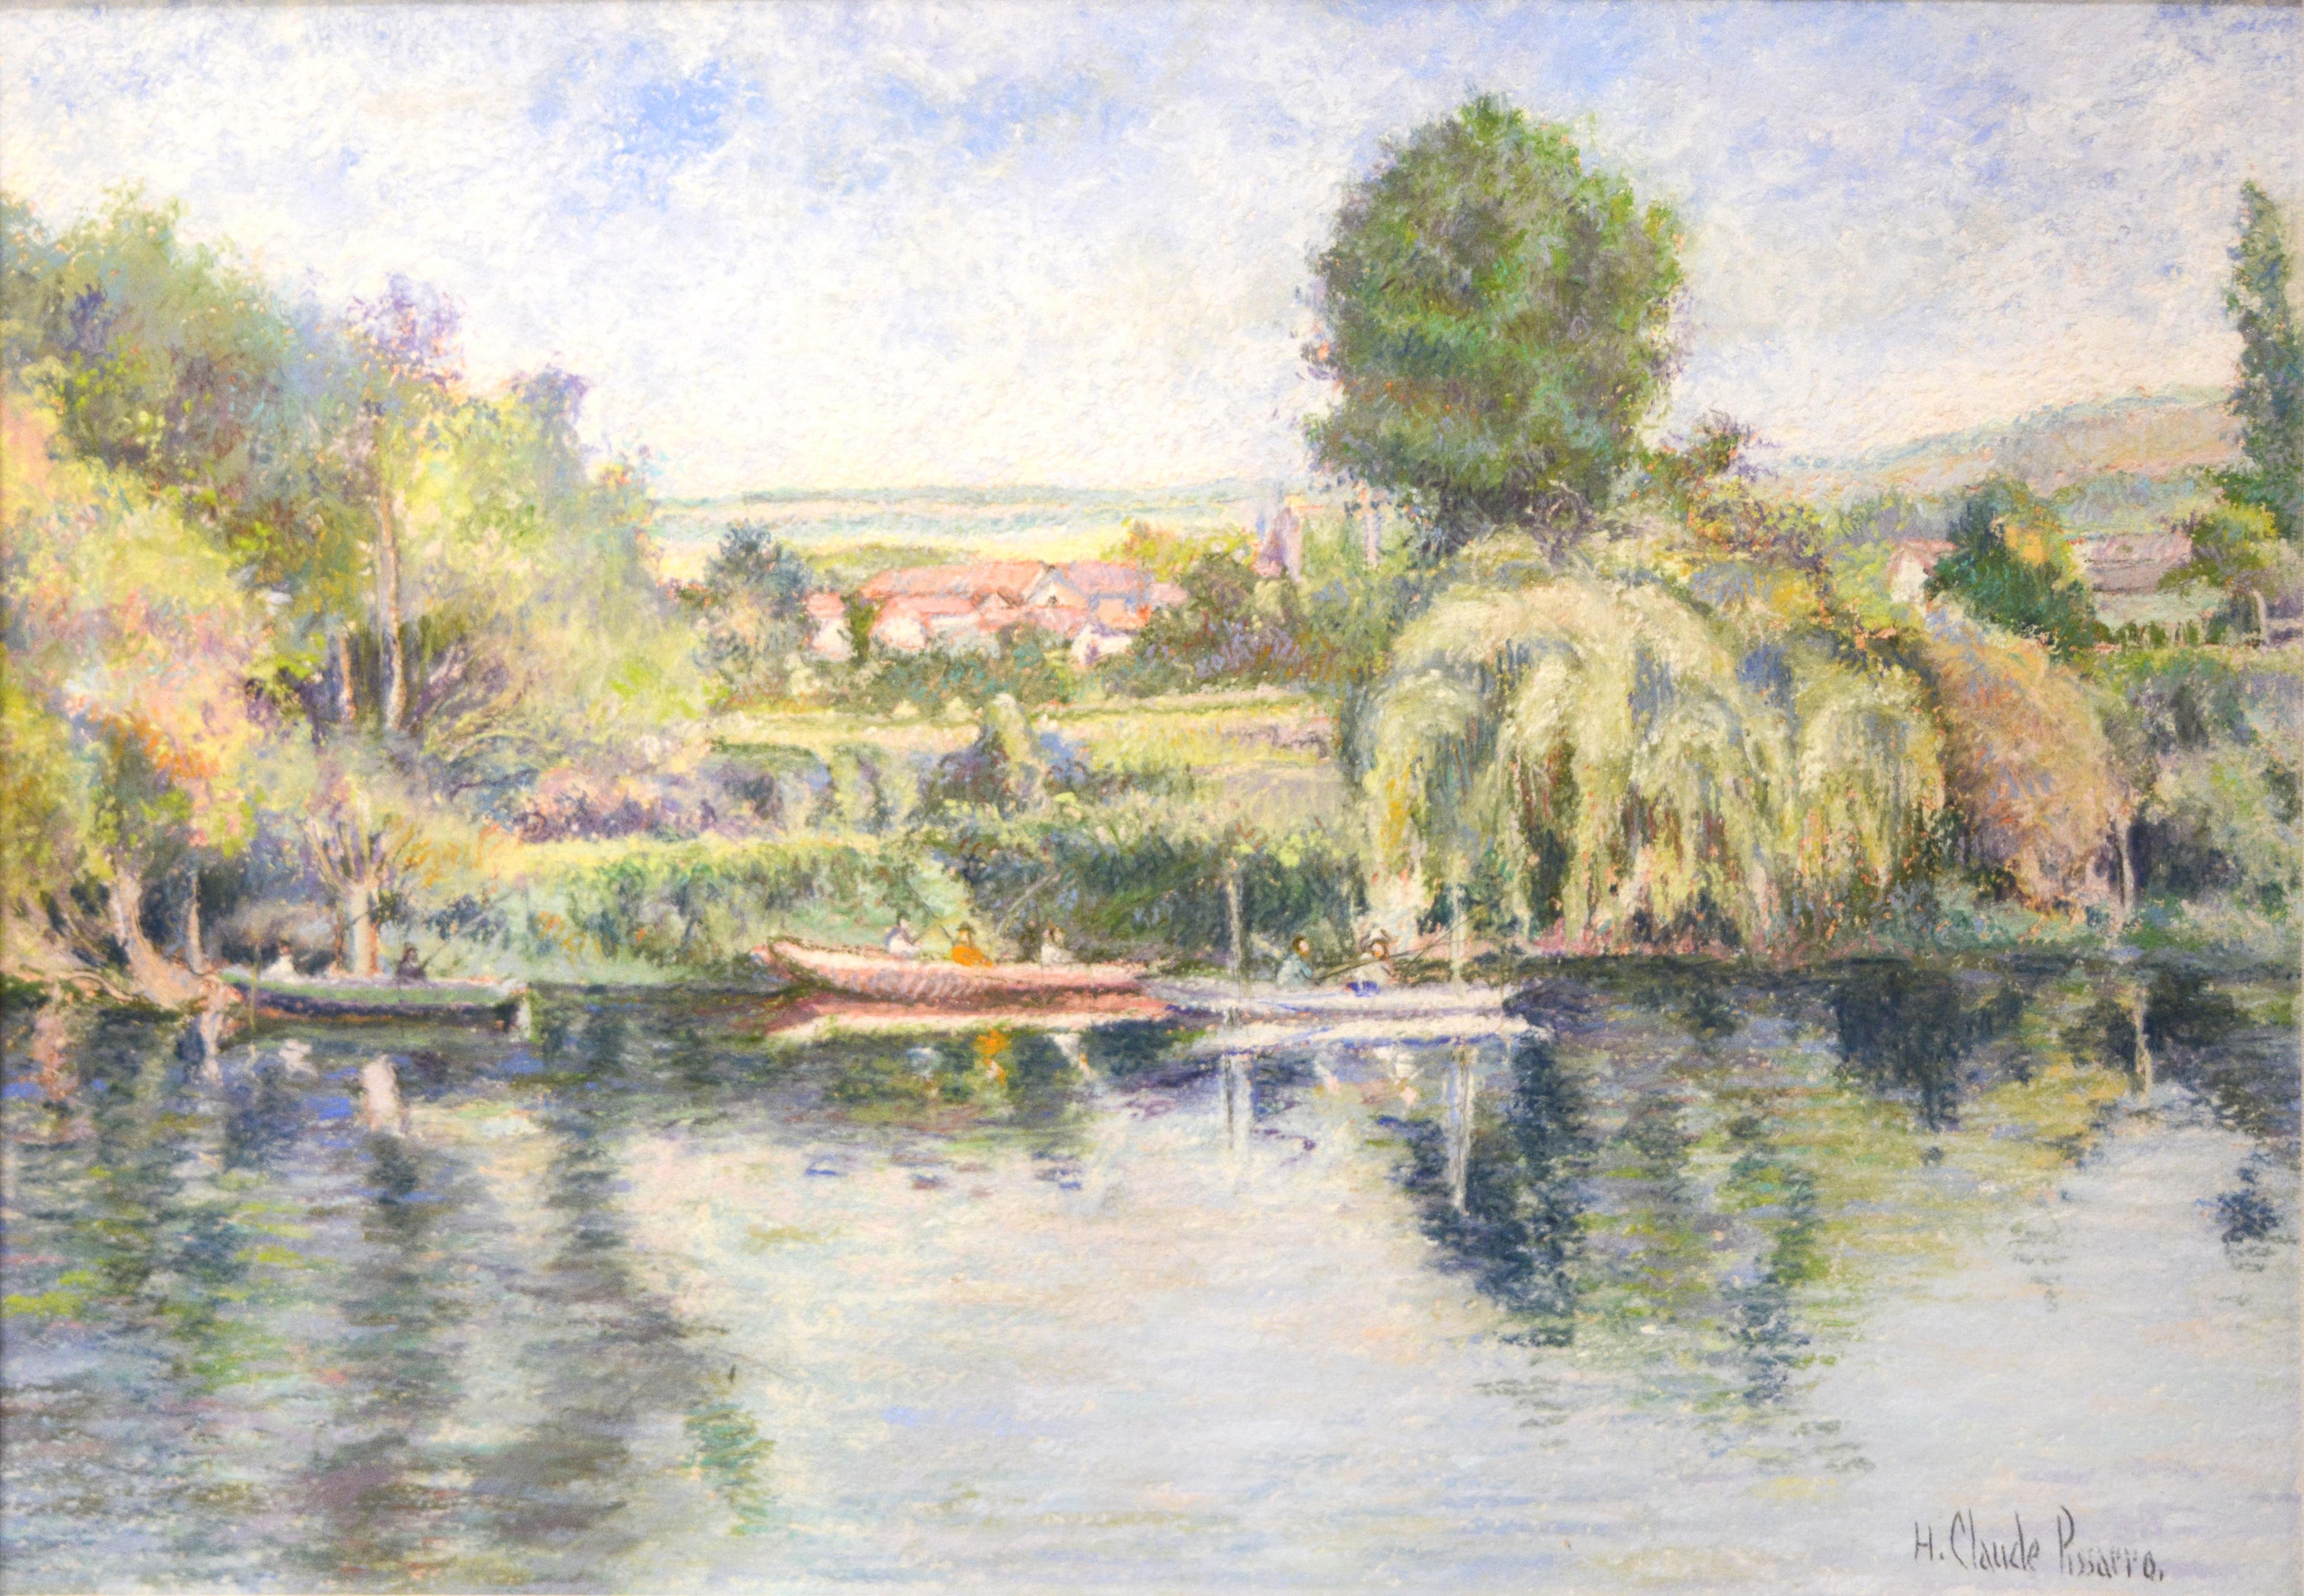 Hughes Claude Pissarro Landscape Art - French Impressionist Landscape by H.C. Pissarro, titled "Fishing Boats"